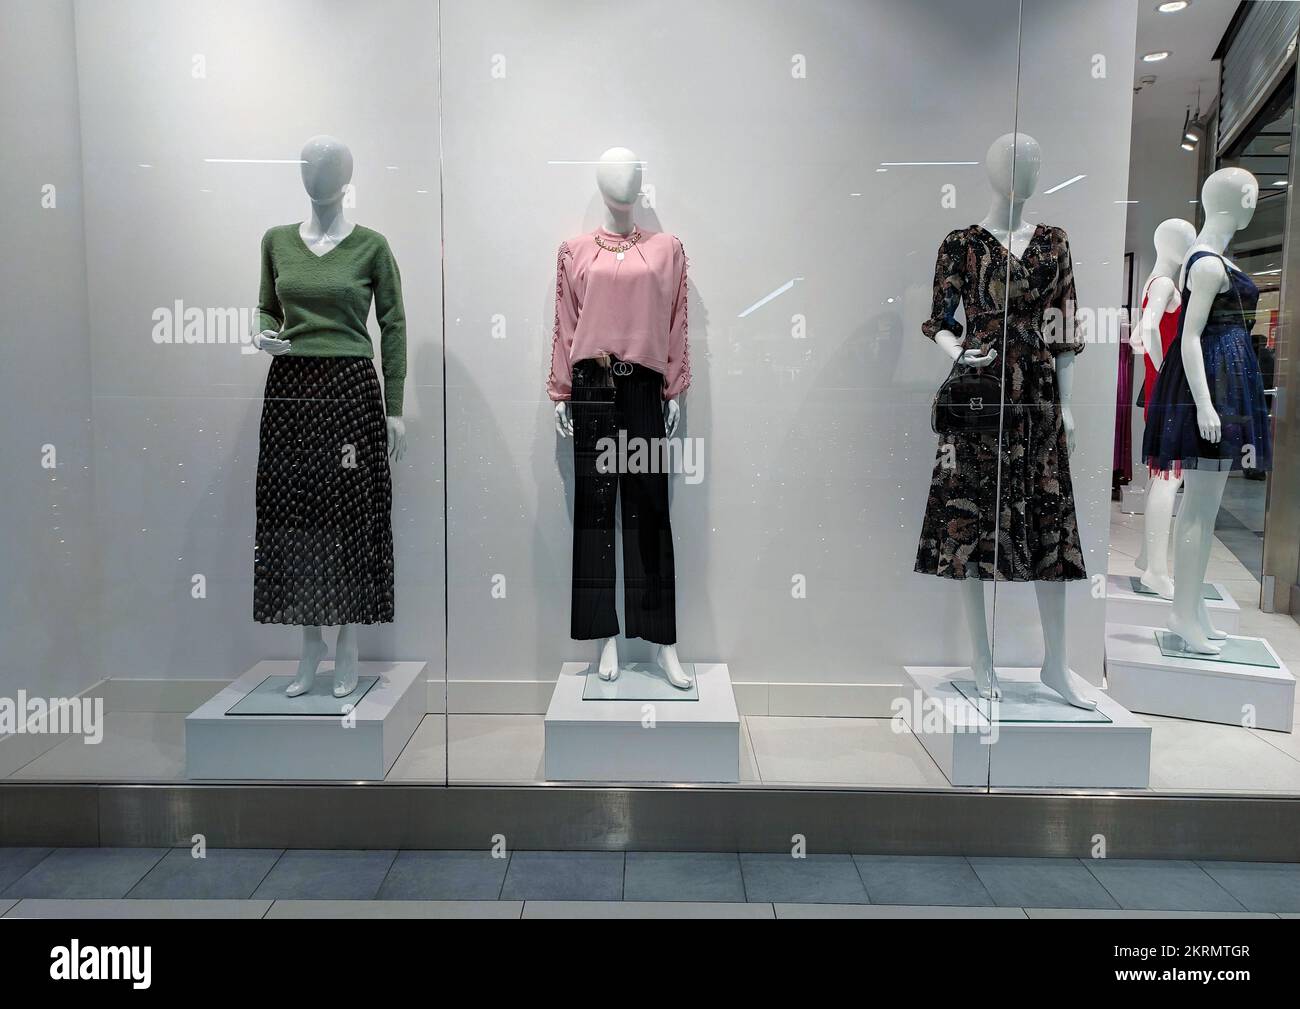 Poland, Bydgoszcz - January 13, 2022: Female fashion mannequins in a ...